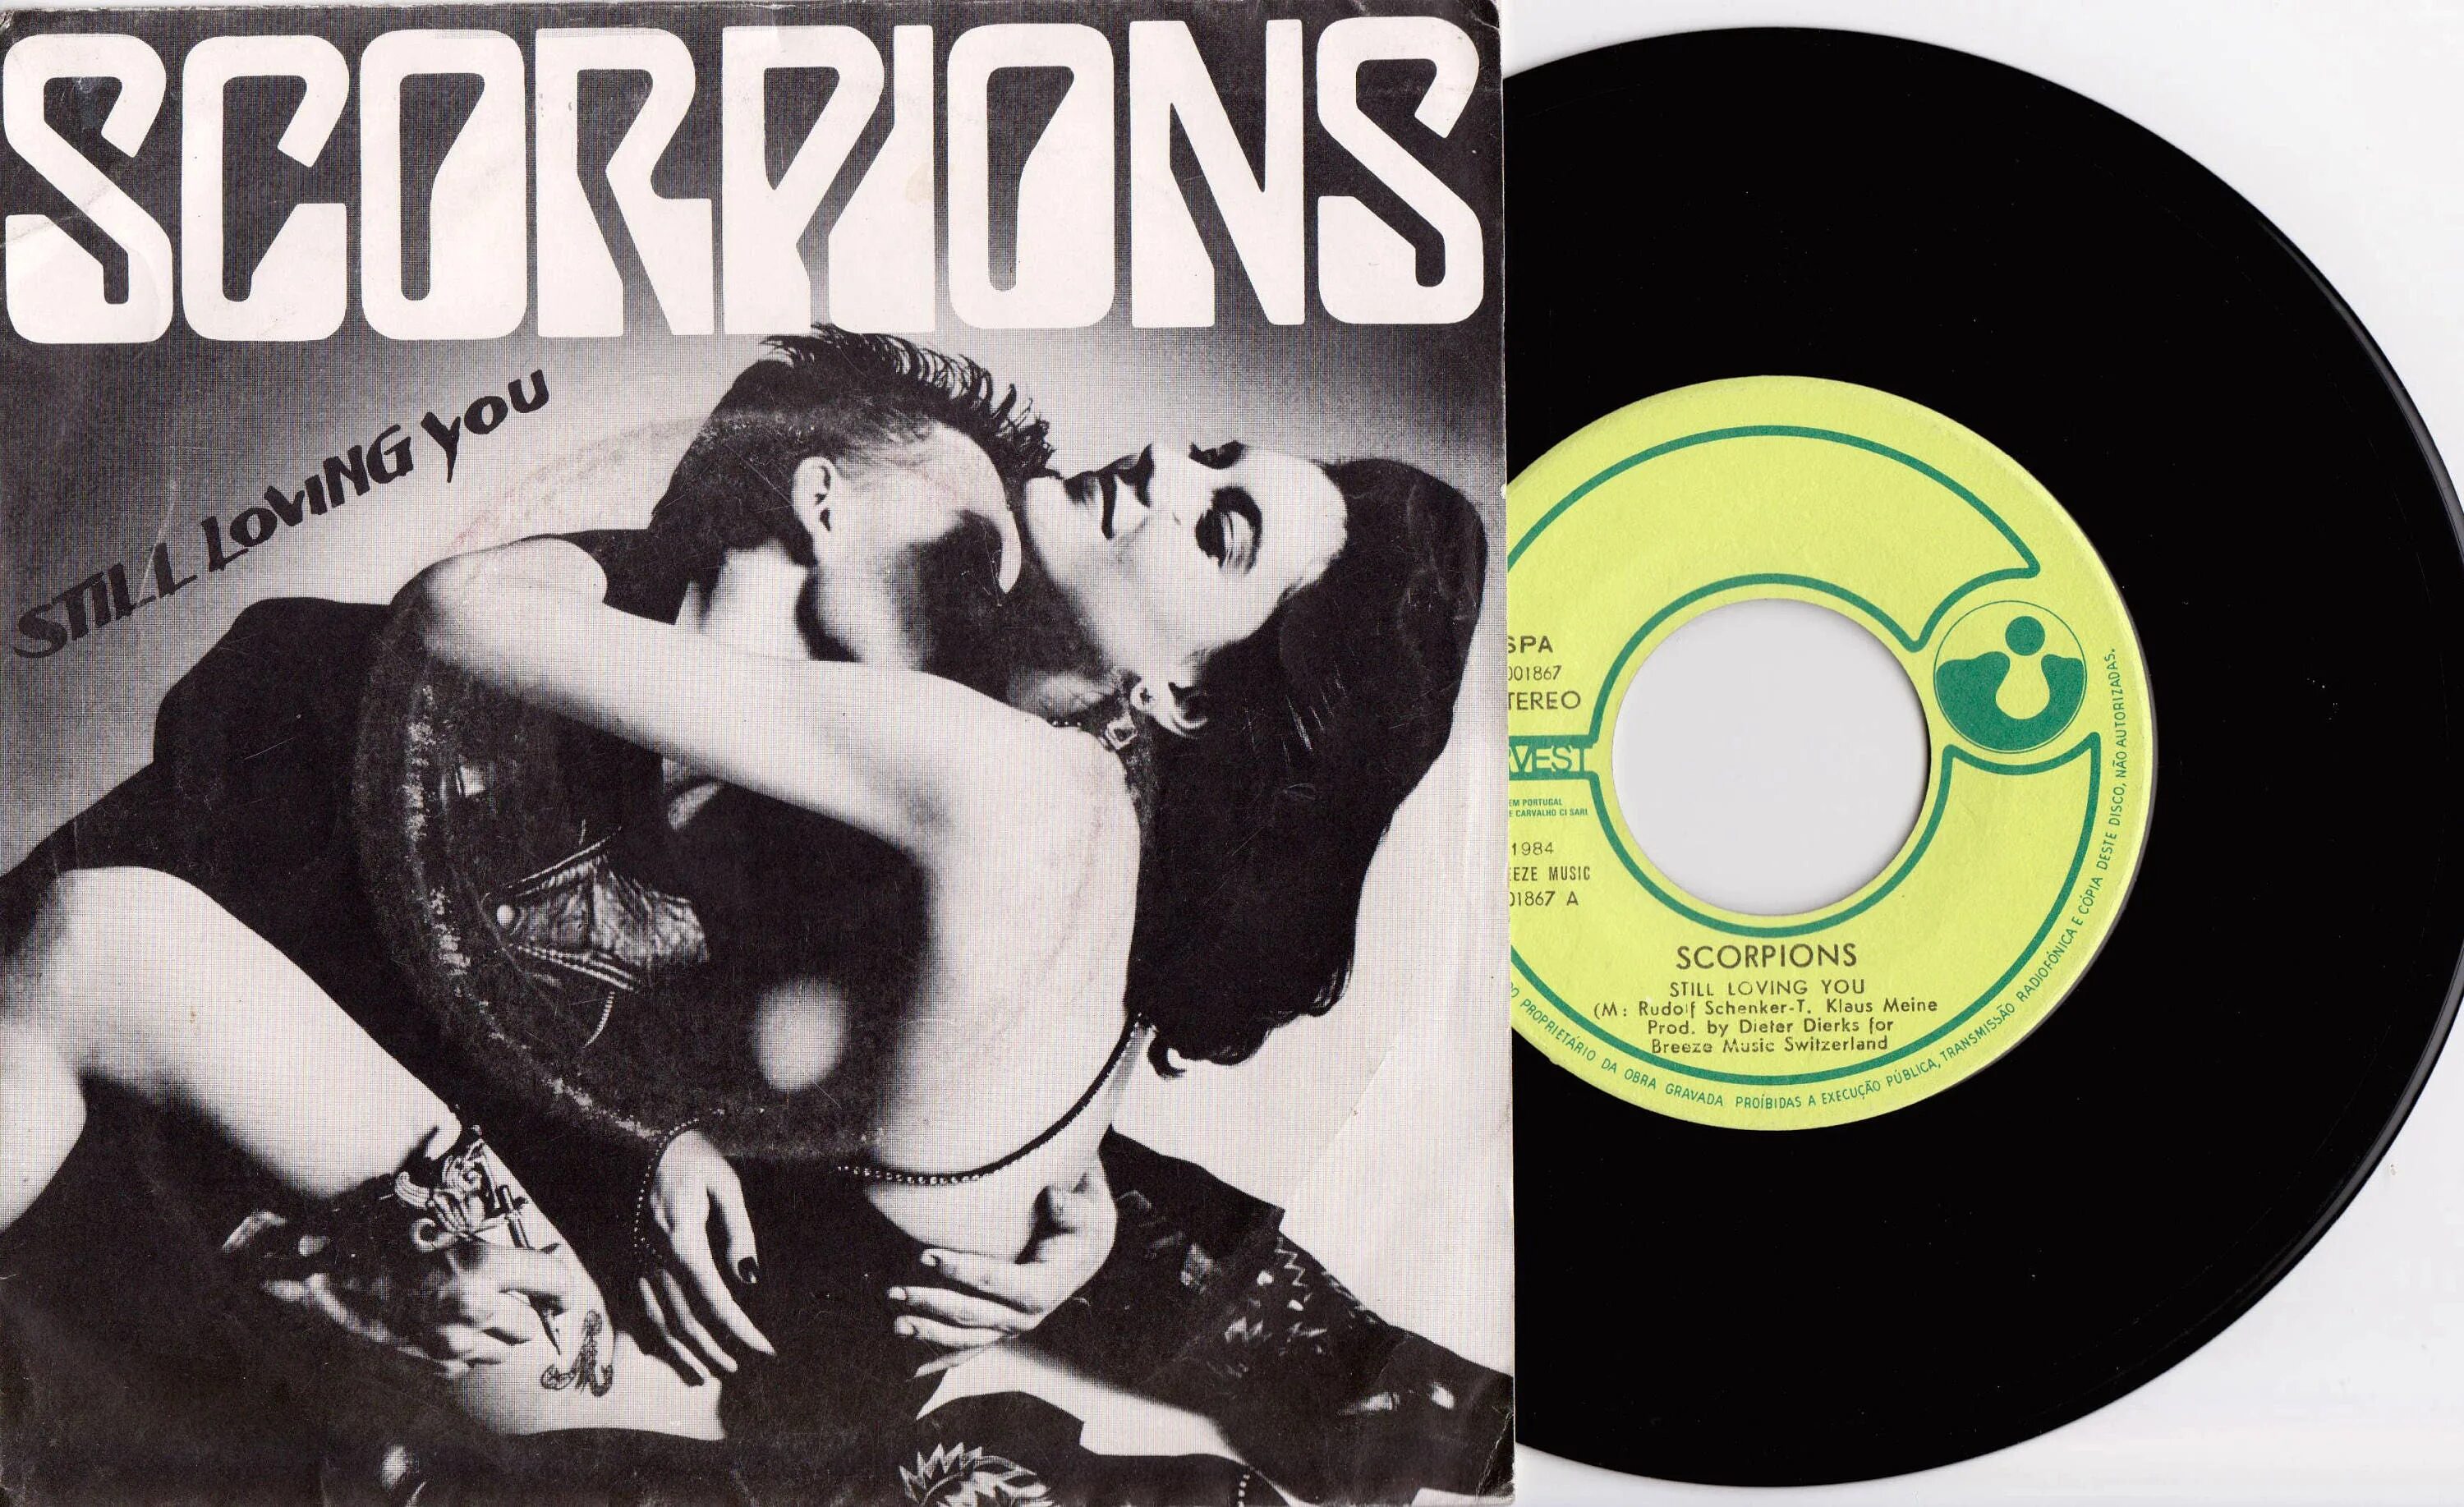 Скорпионс винил 1984. Скорпионс стил. Scorpions still loving you 1984. Scorpions 1984 Love at first Sting LP. L still loving you